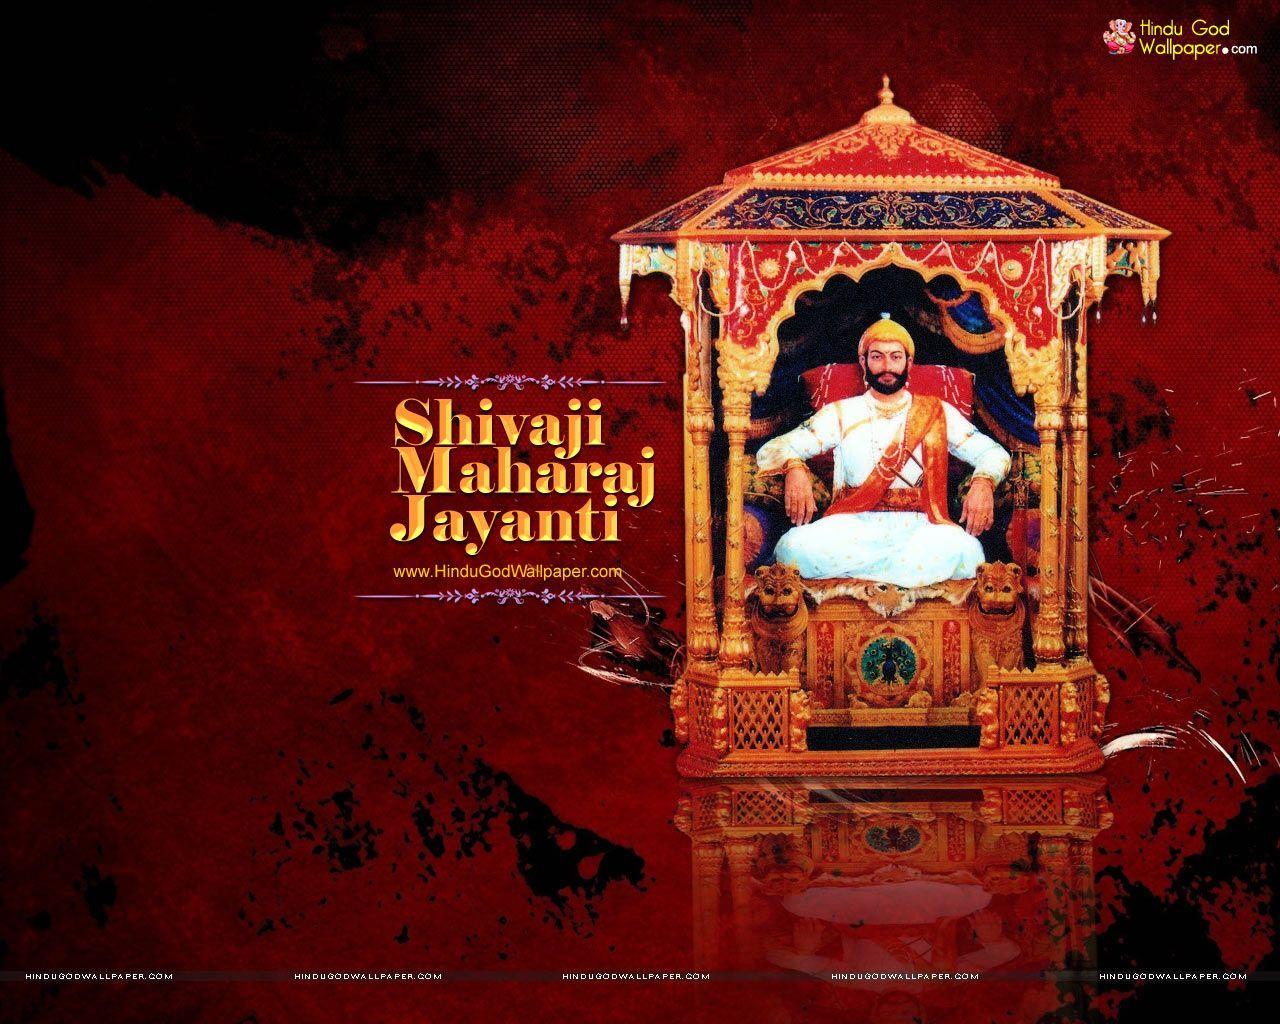 Shivaji Jayanti HD Wallpaper, Messages Image Download